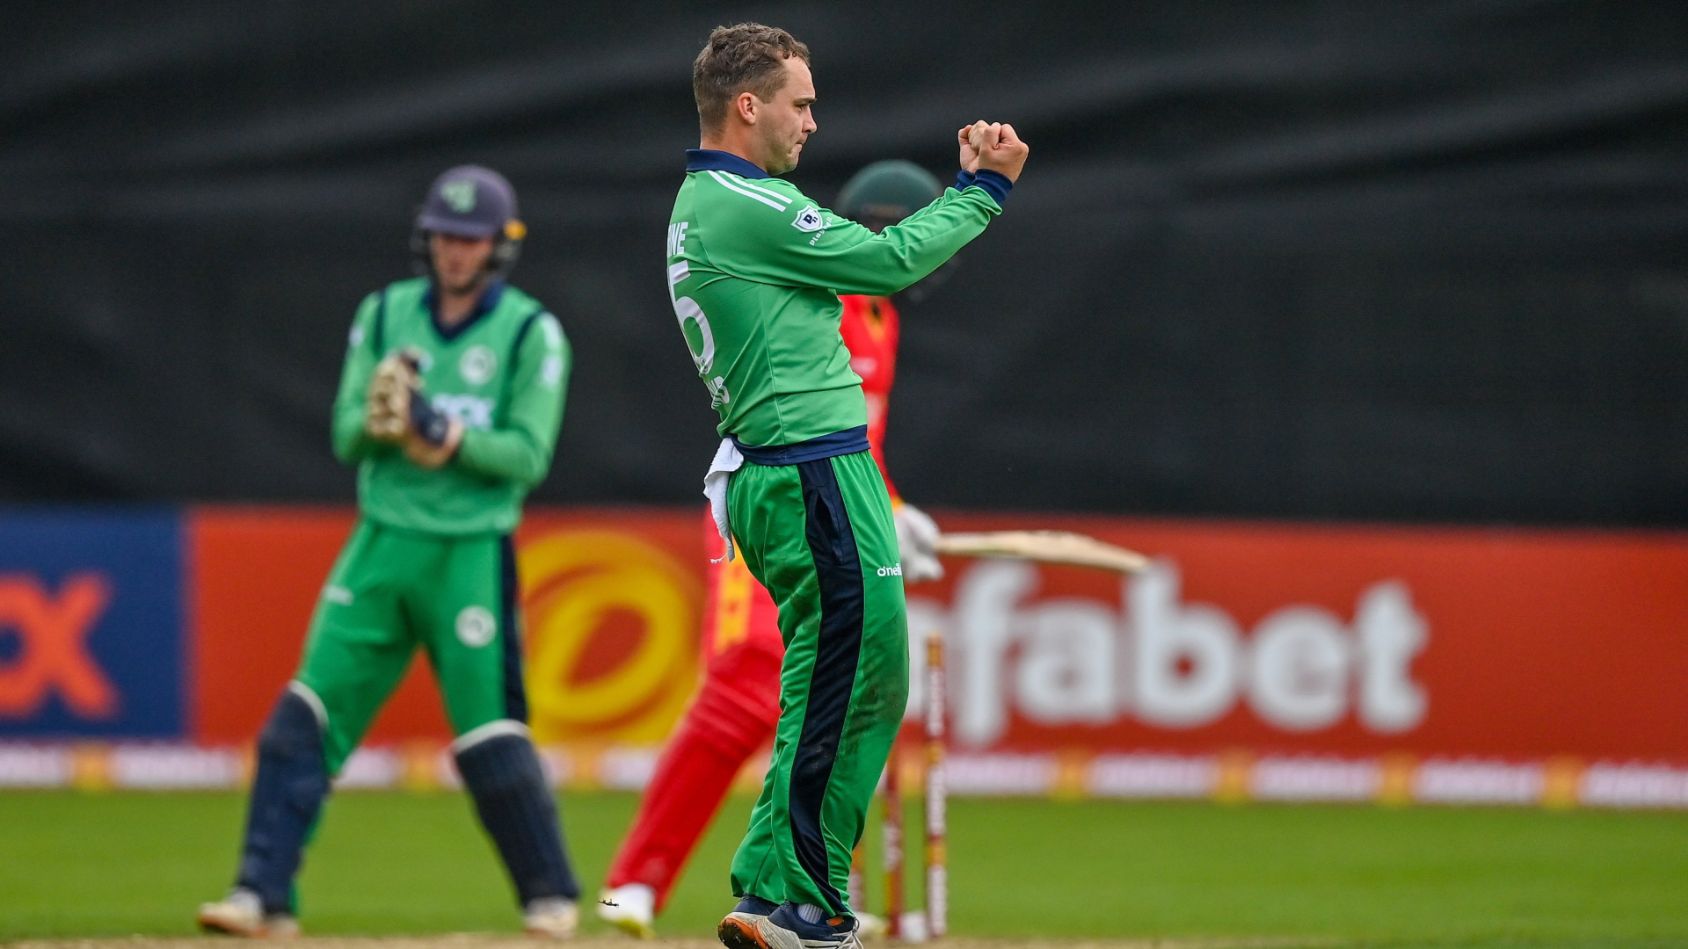 Ireland level series courtesy Joshua Little and Andy McBrine stellar bowling performances